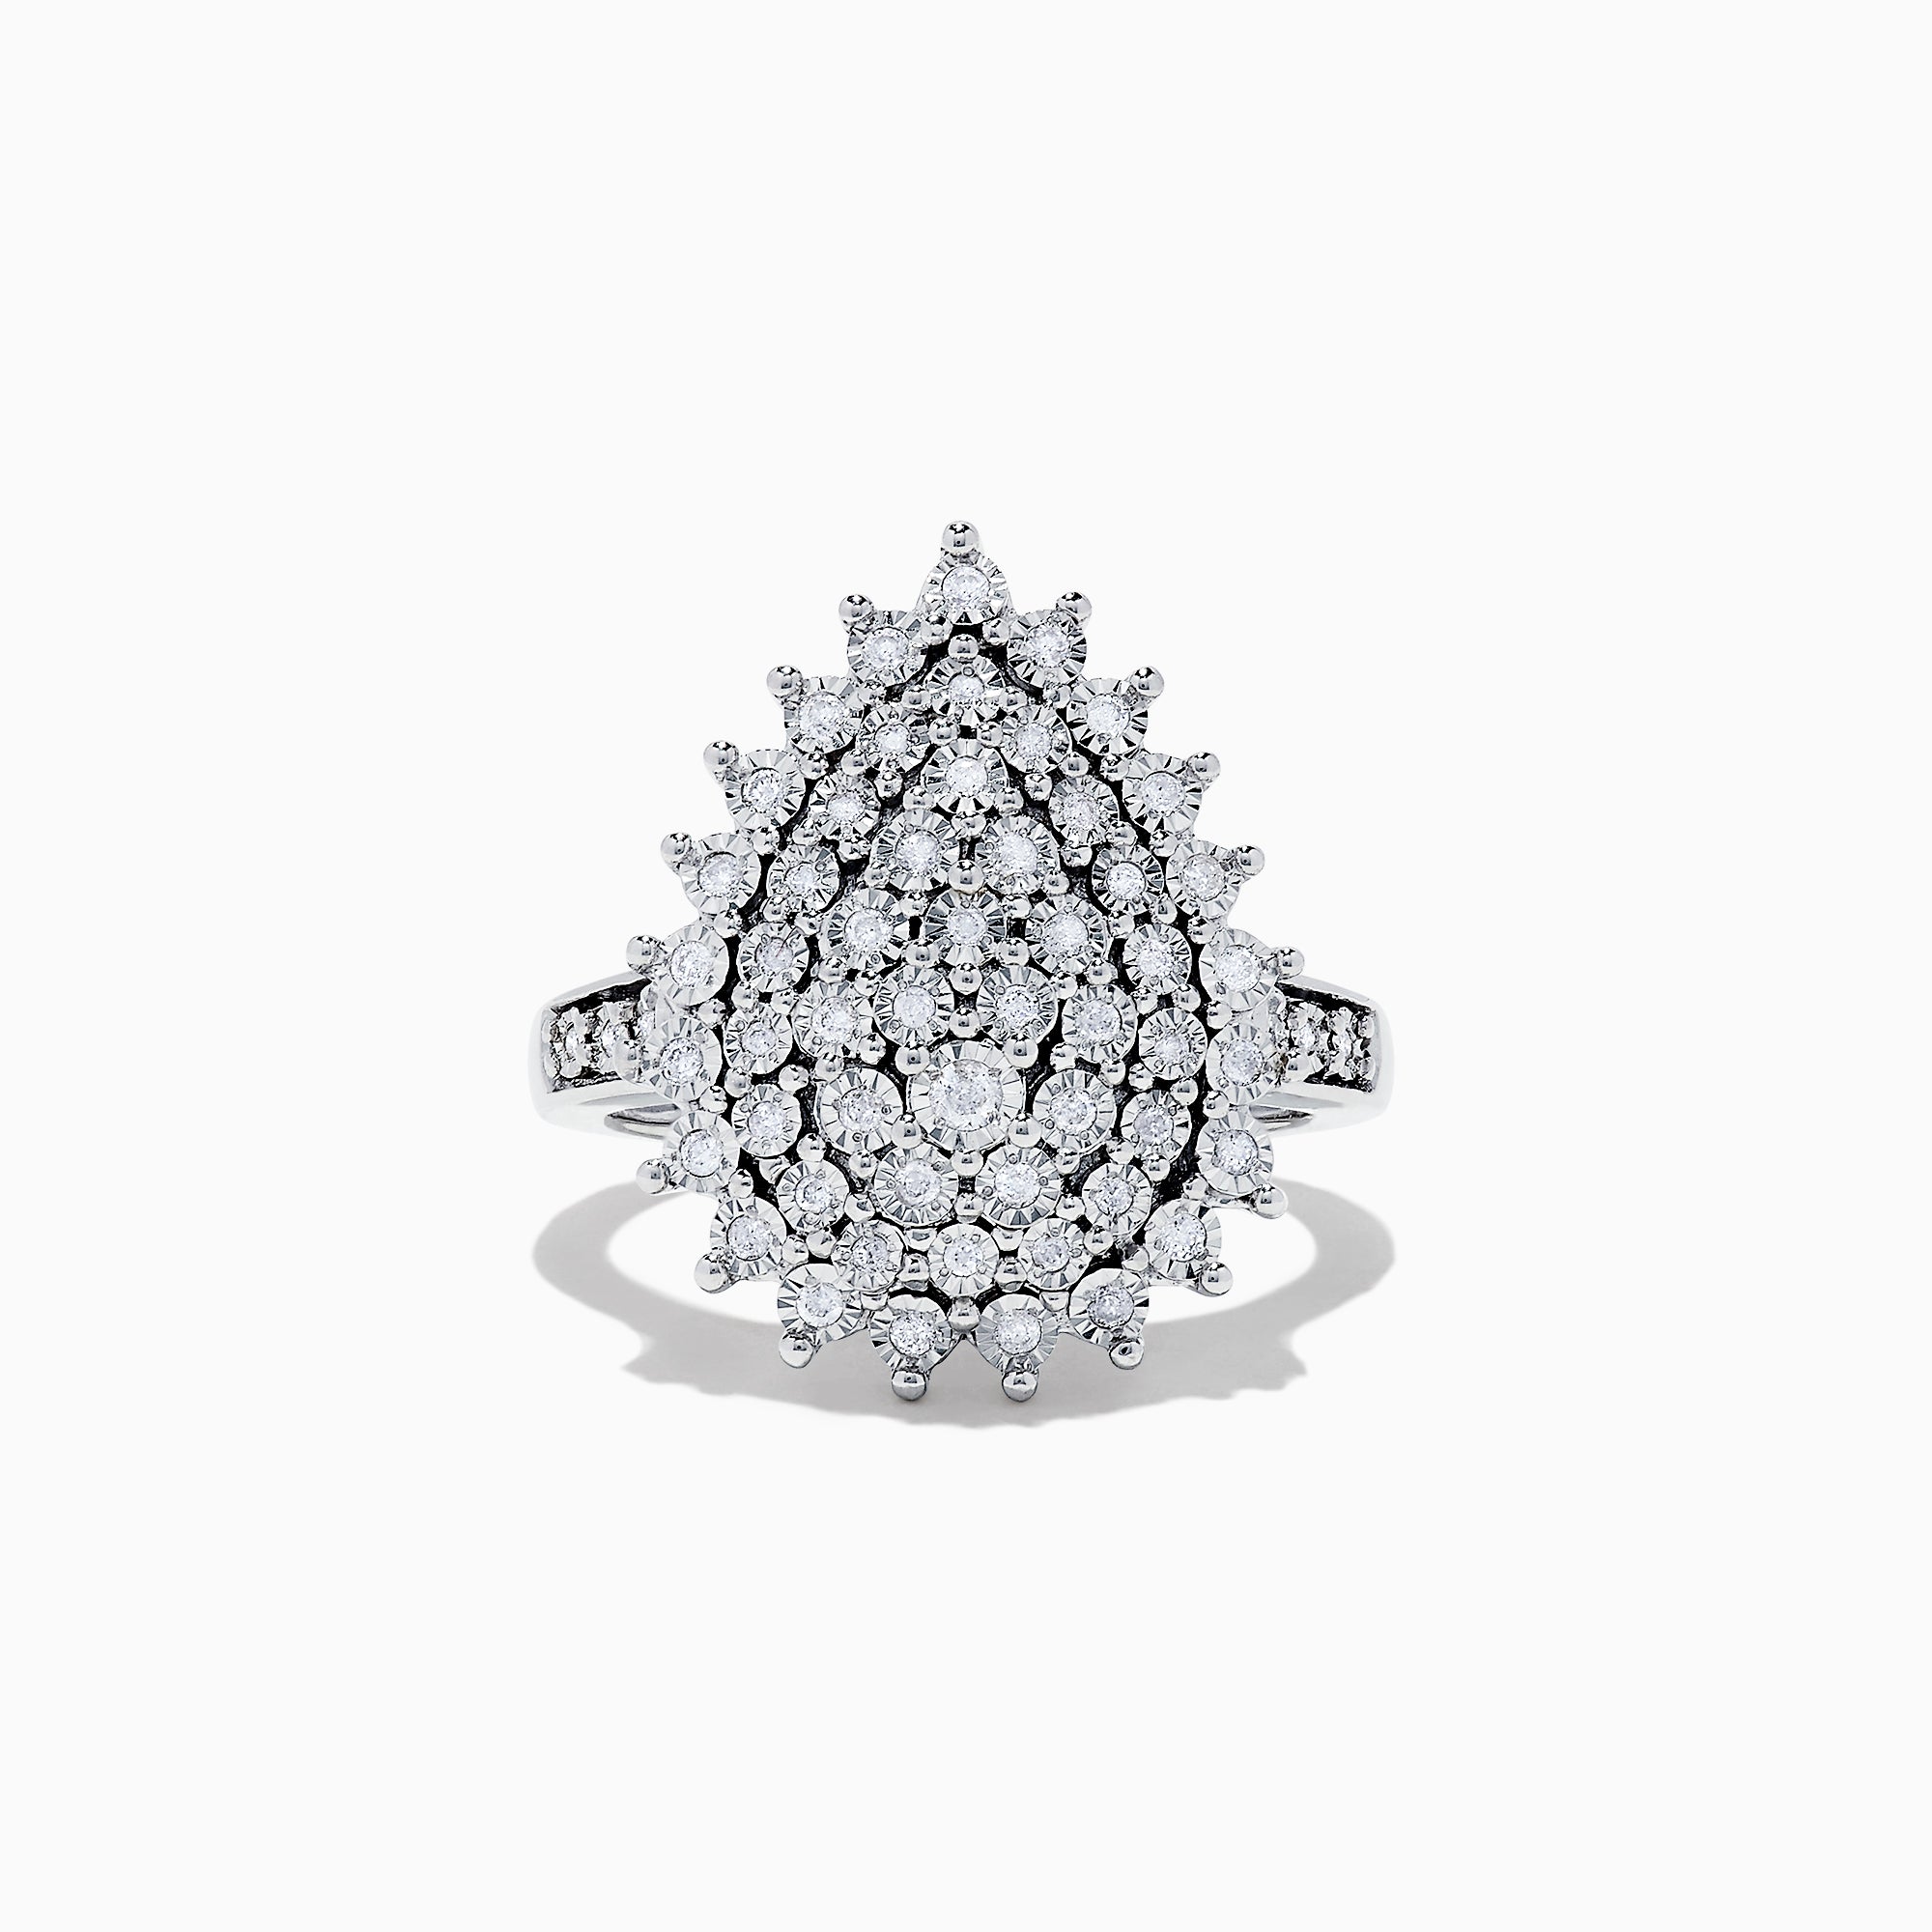 Effy 925 Sterling Silver Diamond Cluster Ring, 0.28 TCW